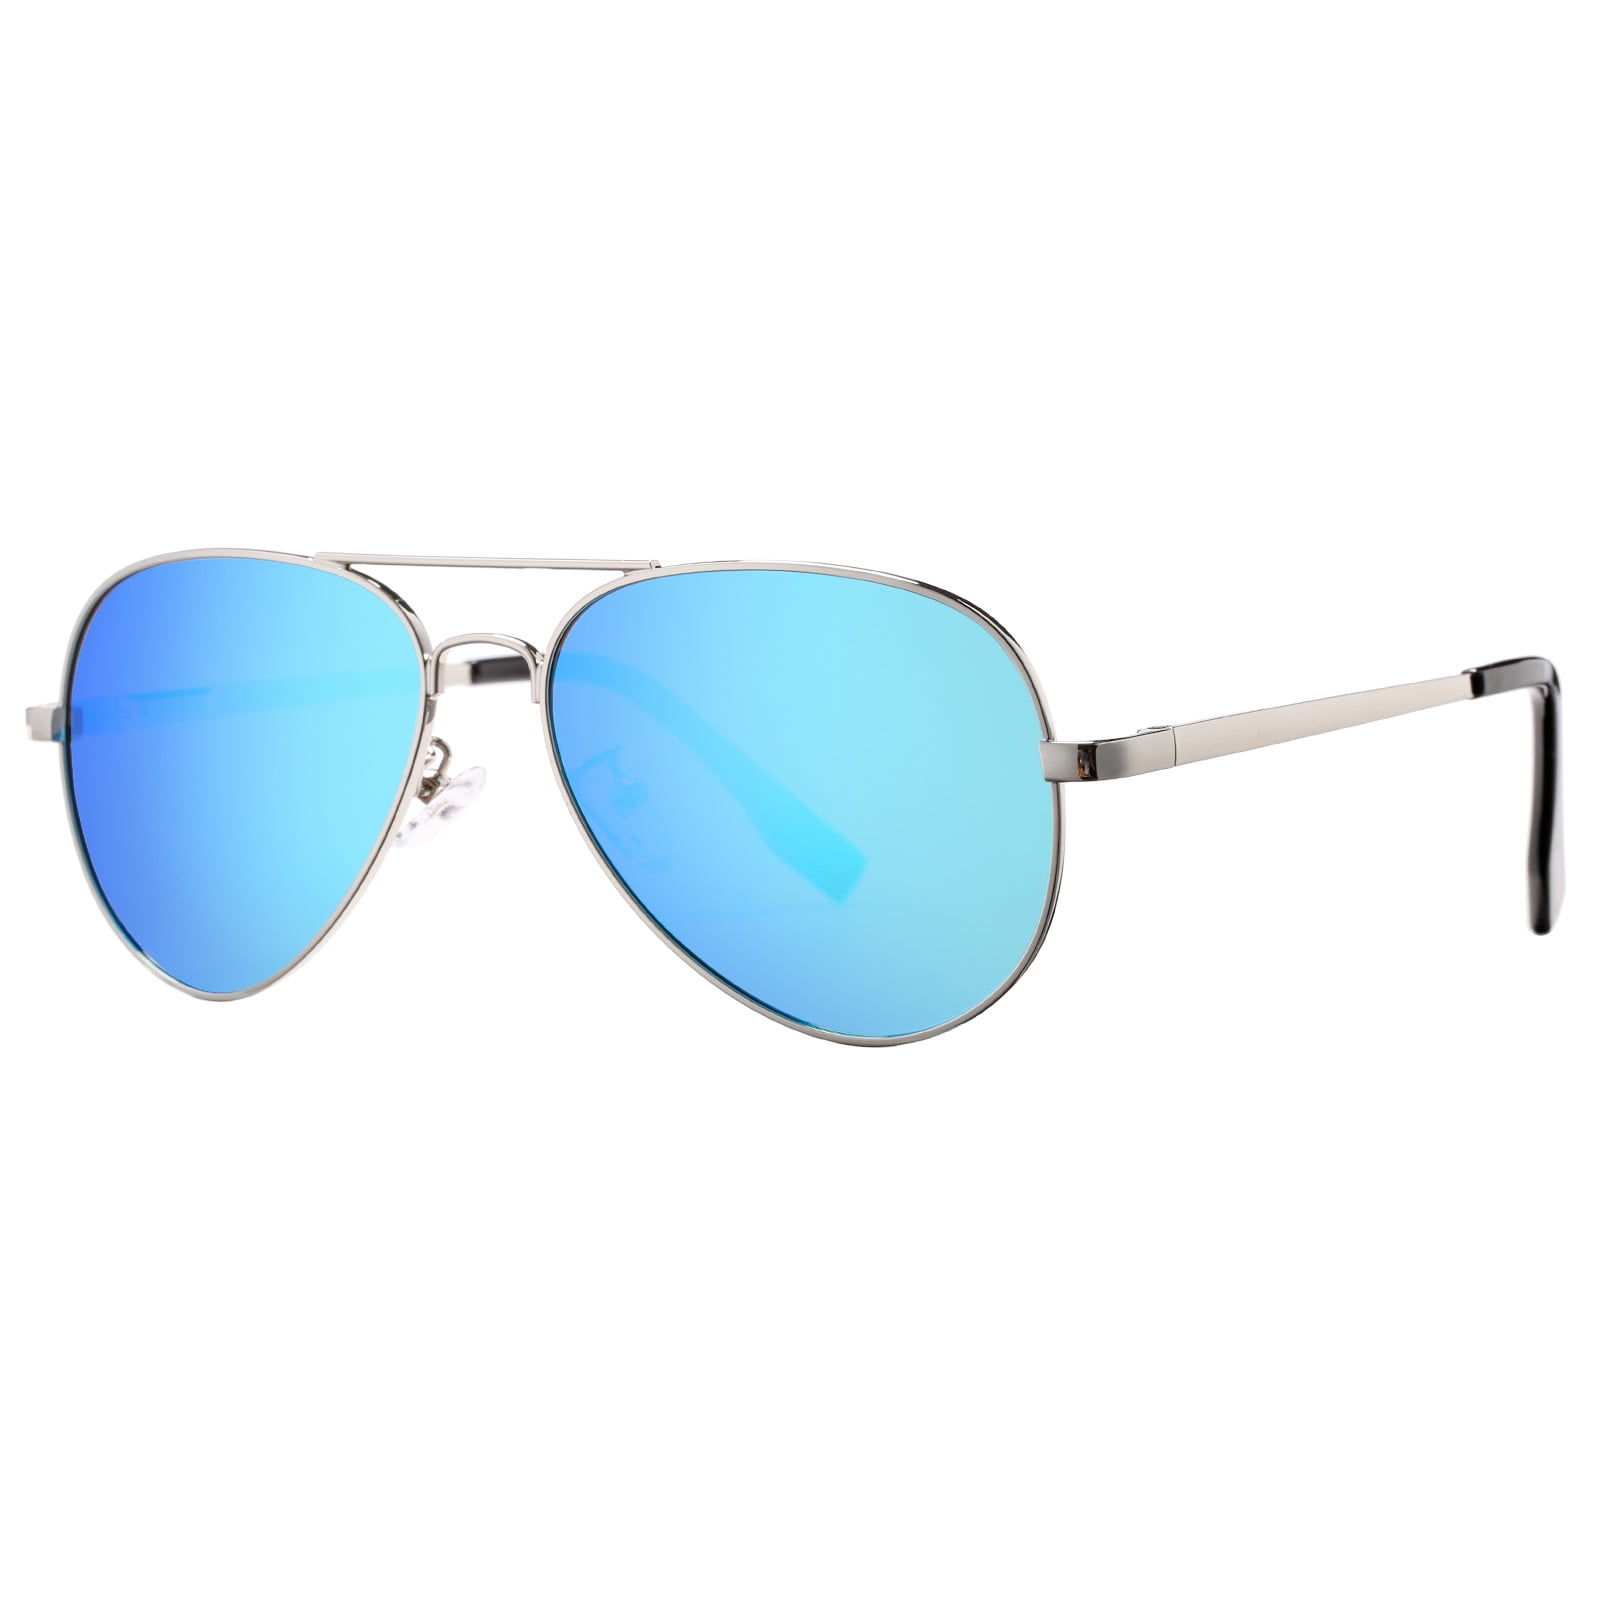 COASION Mens Polarized Aviator Sunglasses Blue Tinted Aviators for ...